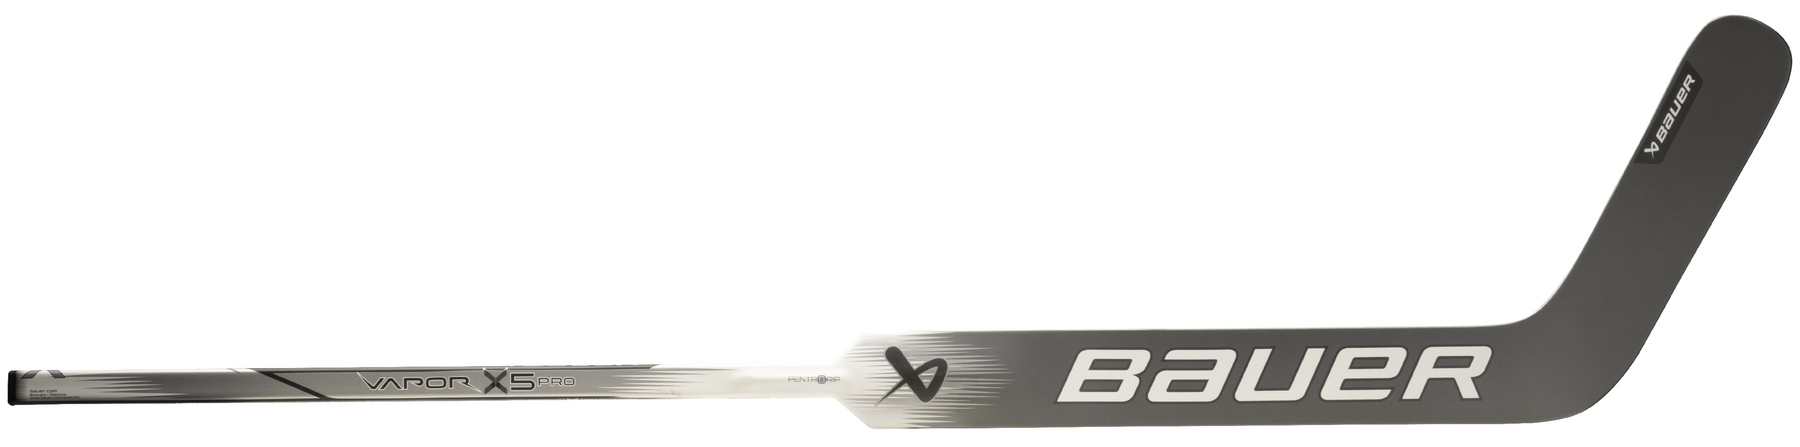 Bauer Vapor X5 Pro Intermediate Goalie Stick (Silver Black)